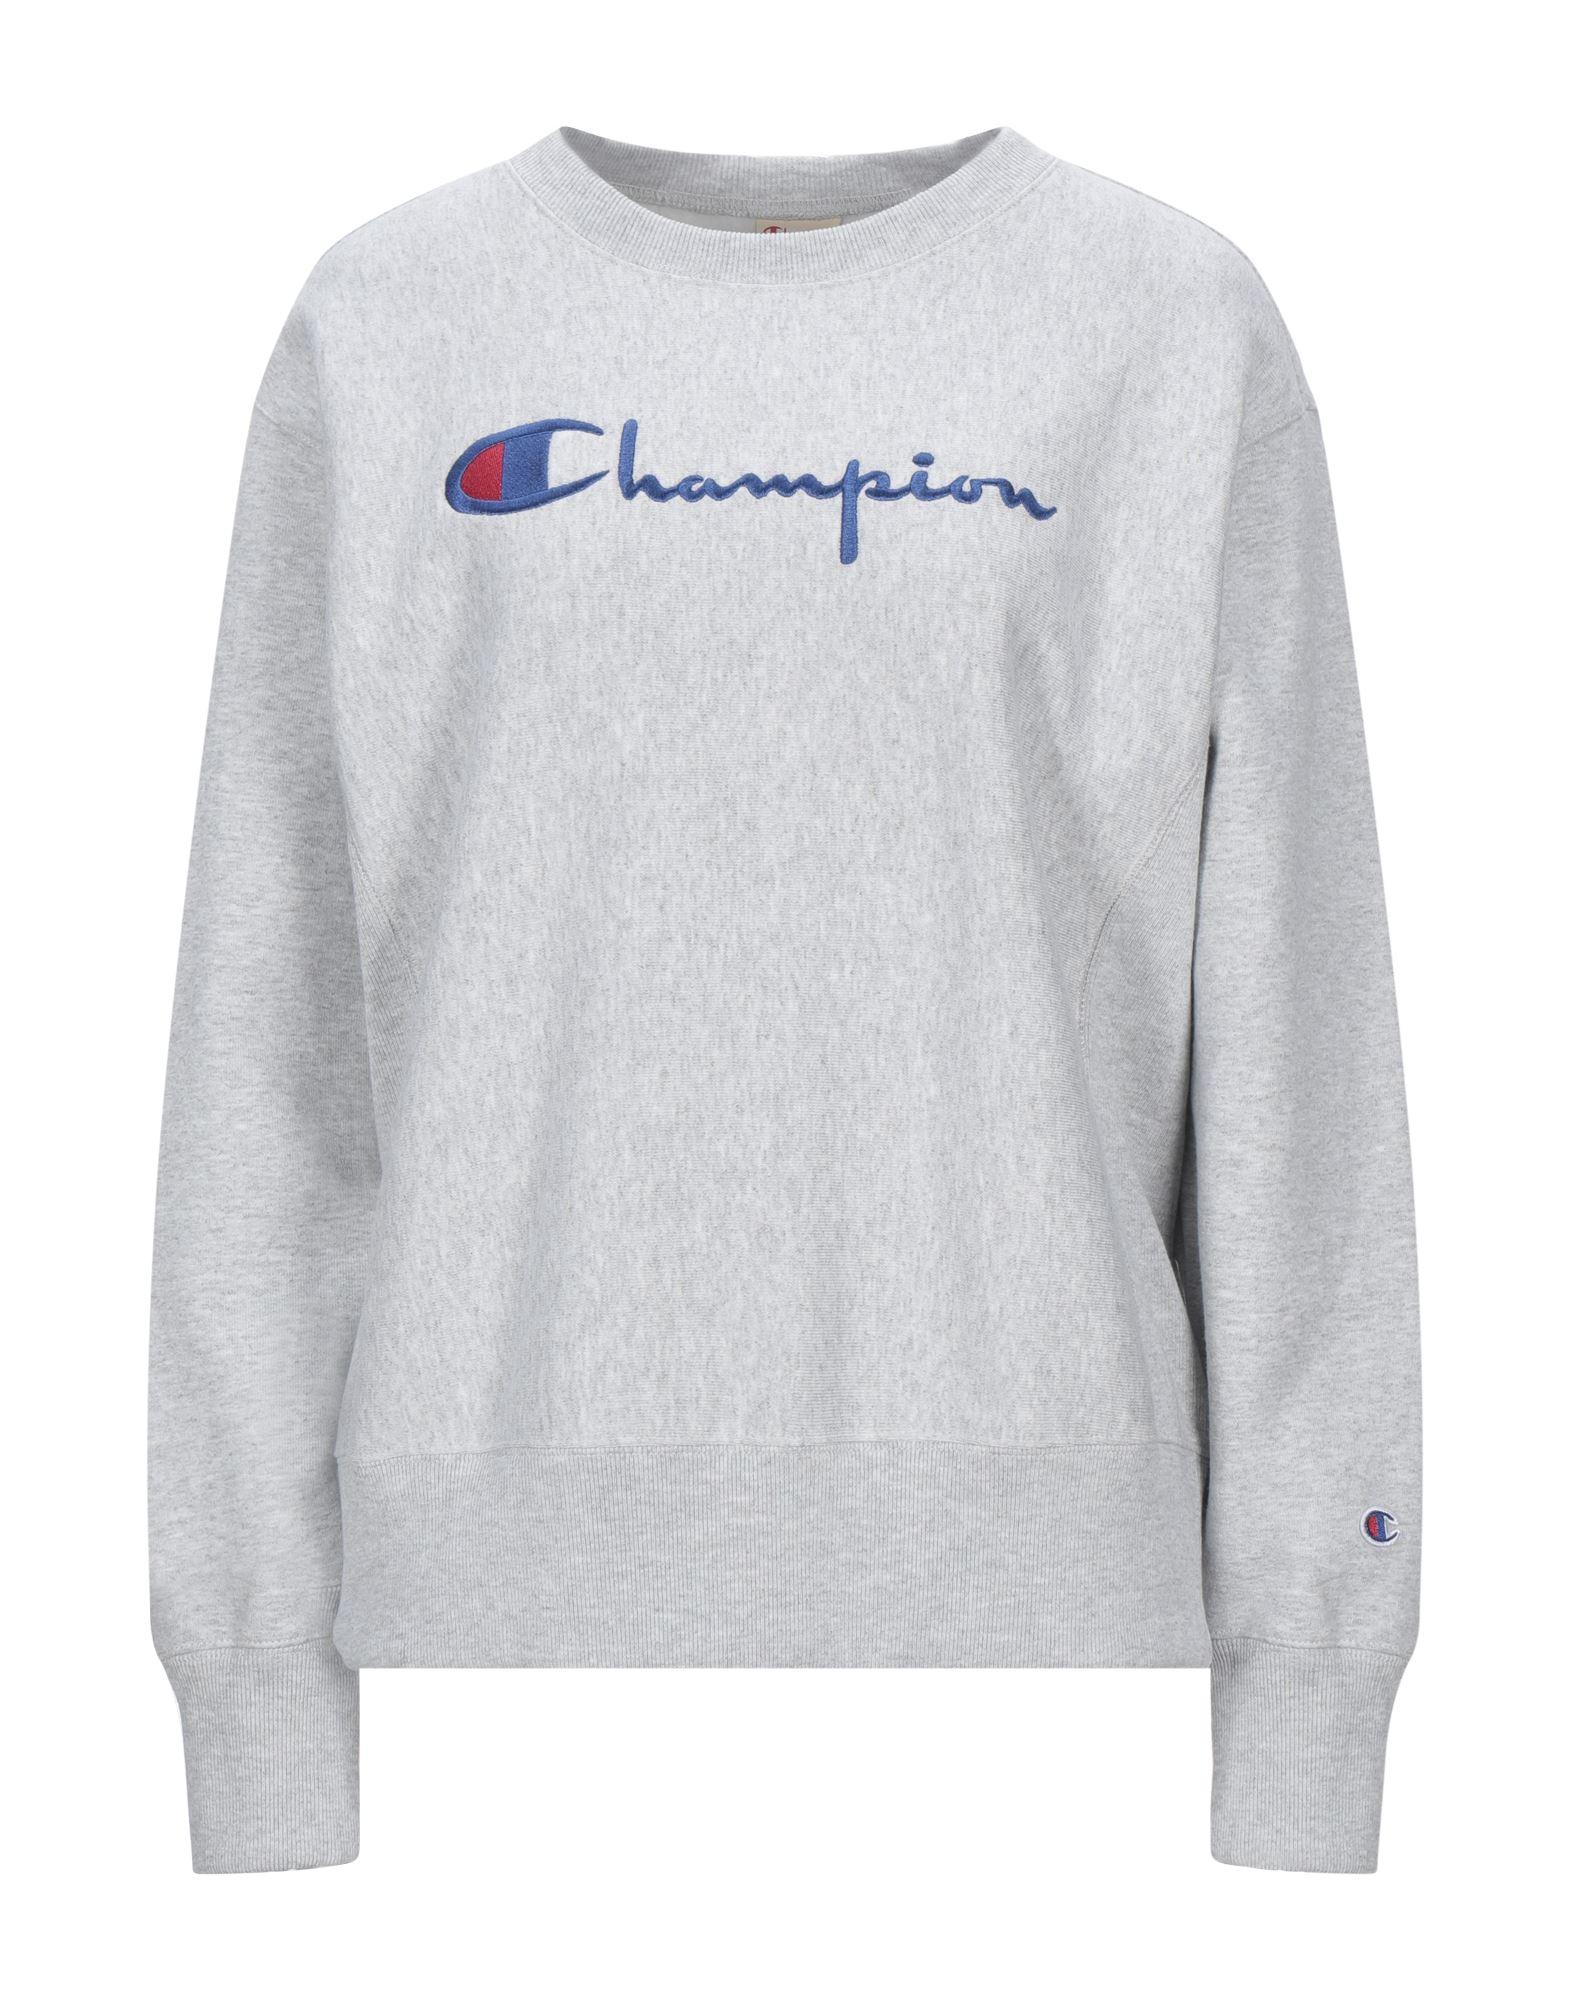 Champion Fleece Sweatshirt in Light Grey (Gray) - Lyst